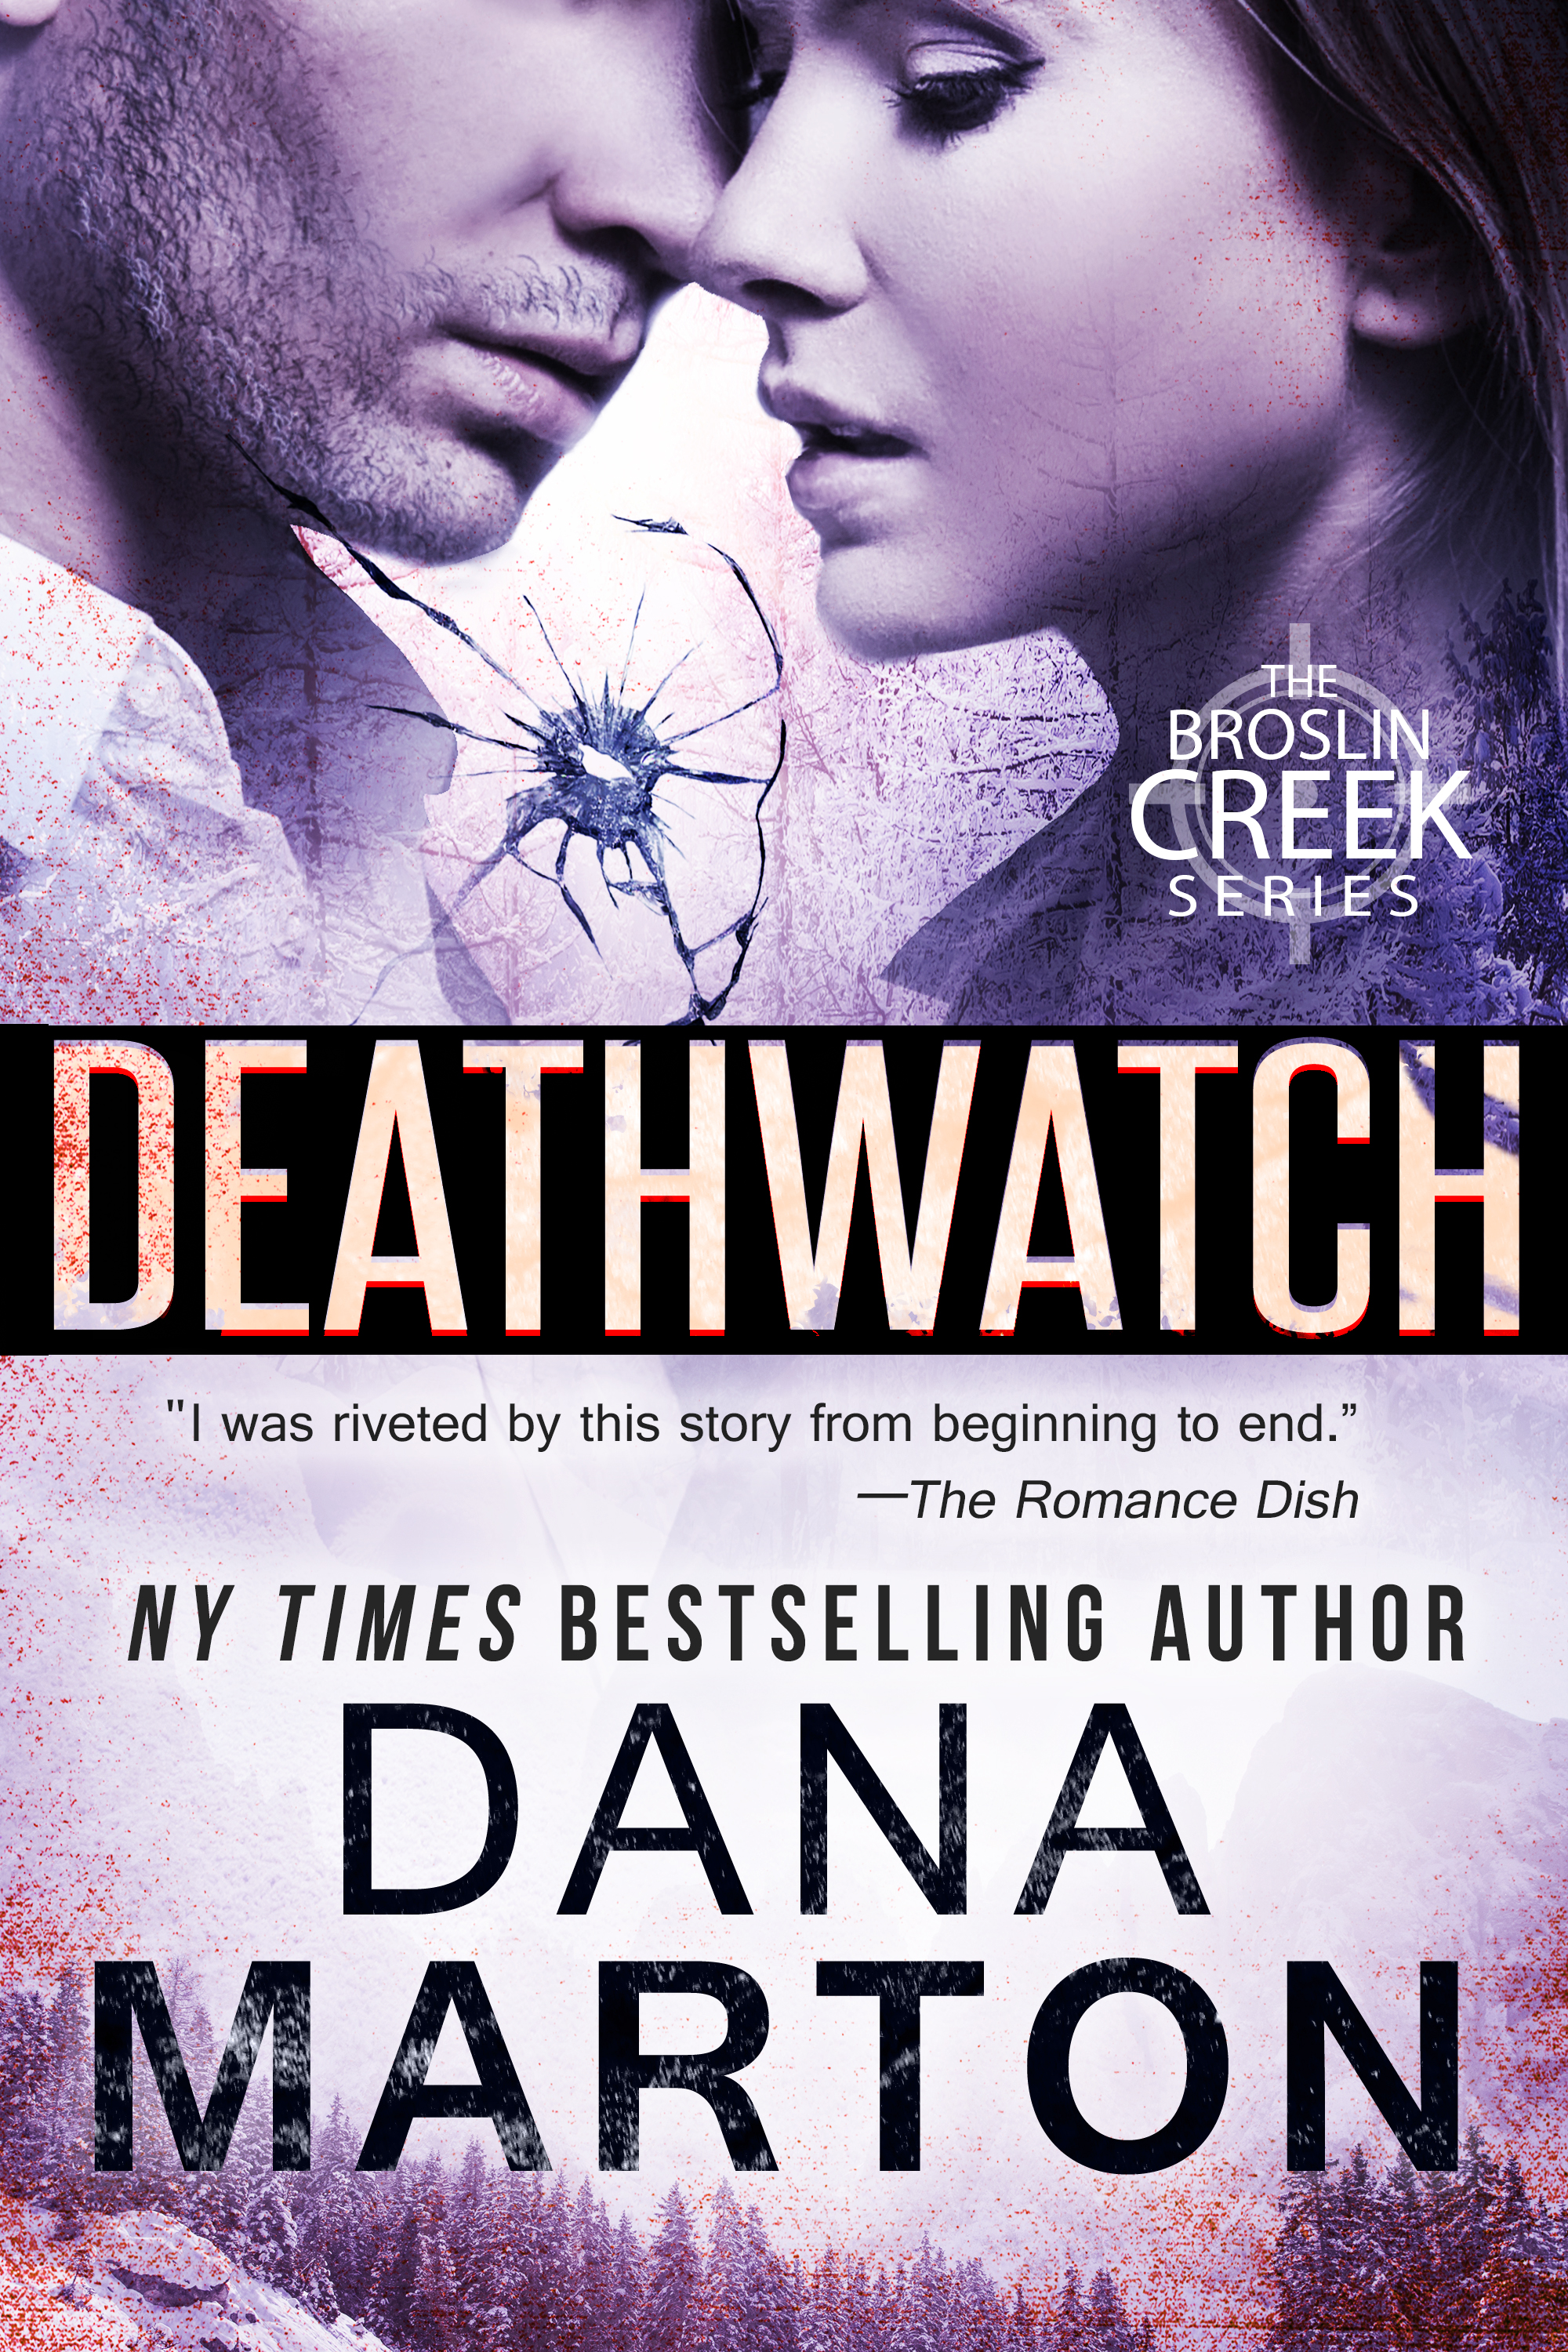 Deathwatch by Dana Marton